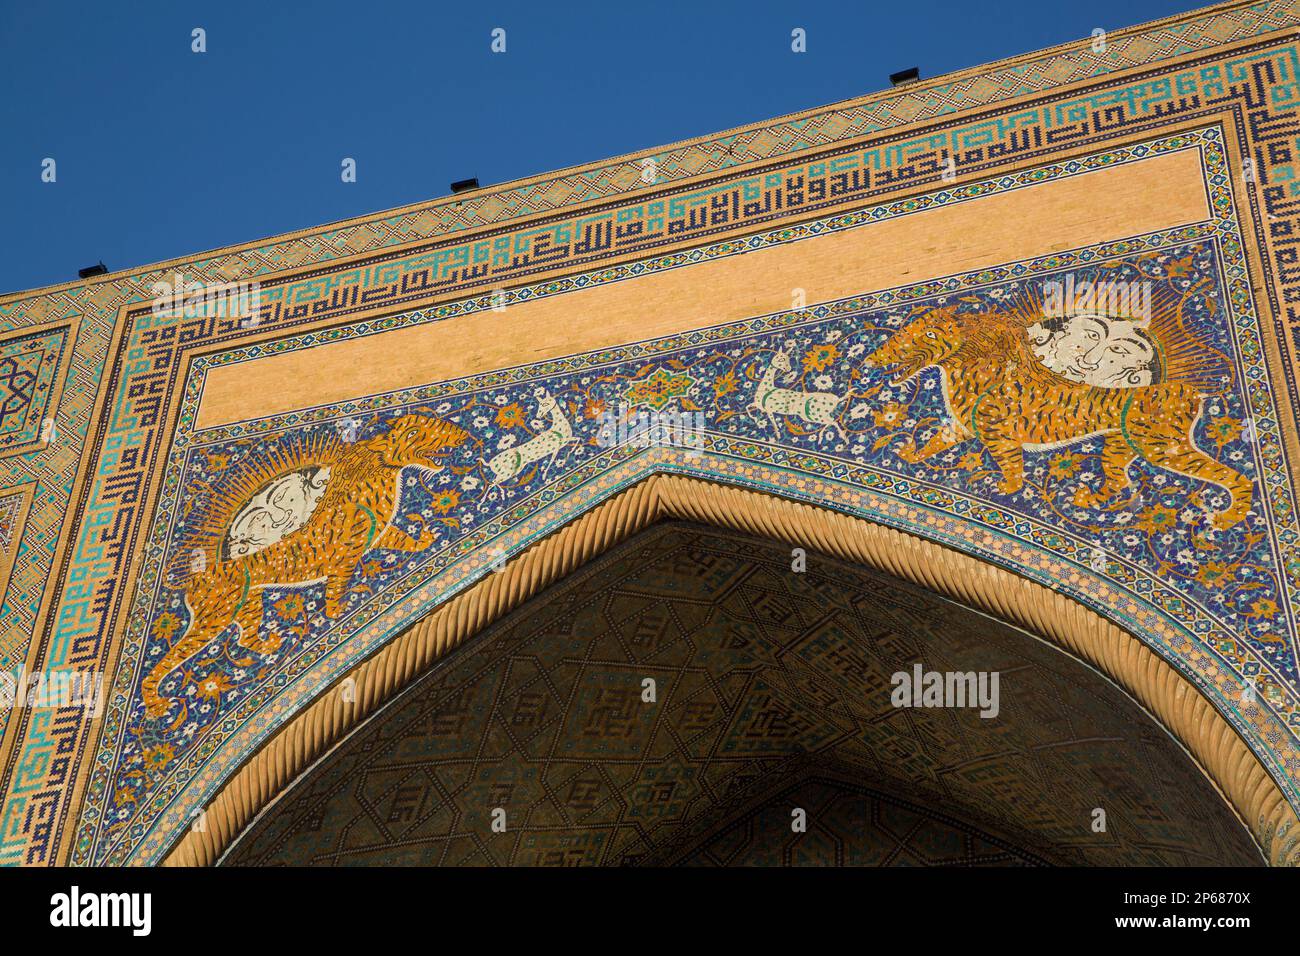 Tiger Images, Sherdor Madrassah, 1636 fertiggestellt, Registanplatz, UNESCO-Weltkulturerbe, Samarkand, Usbekistan, Zentralasien, Asien Stockfoto